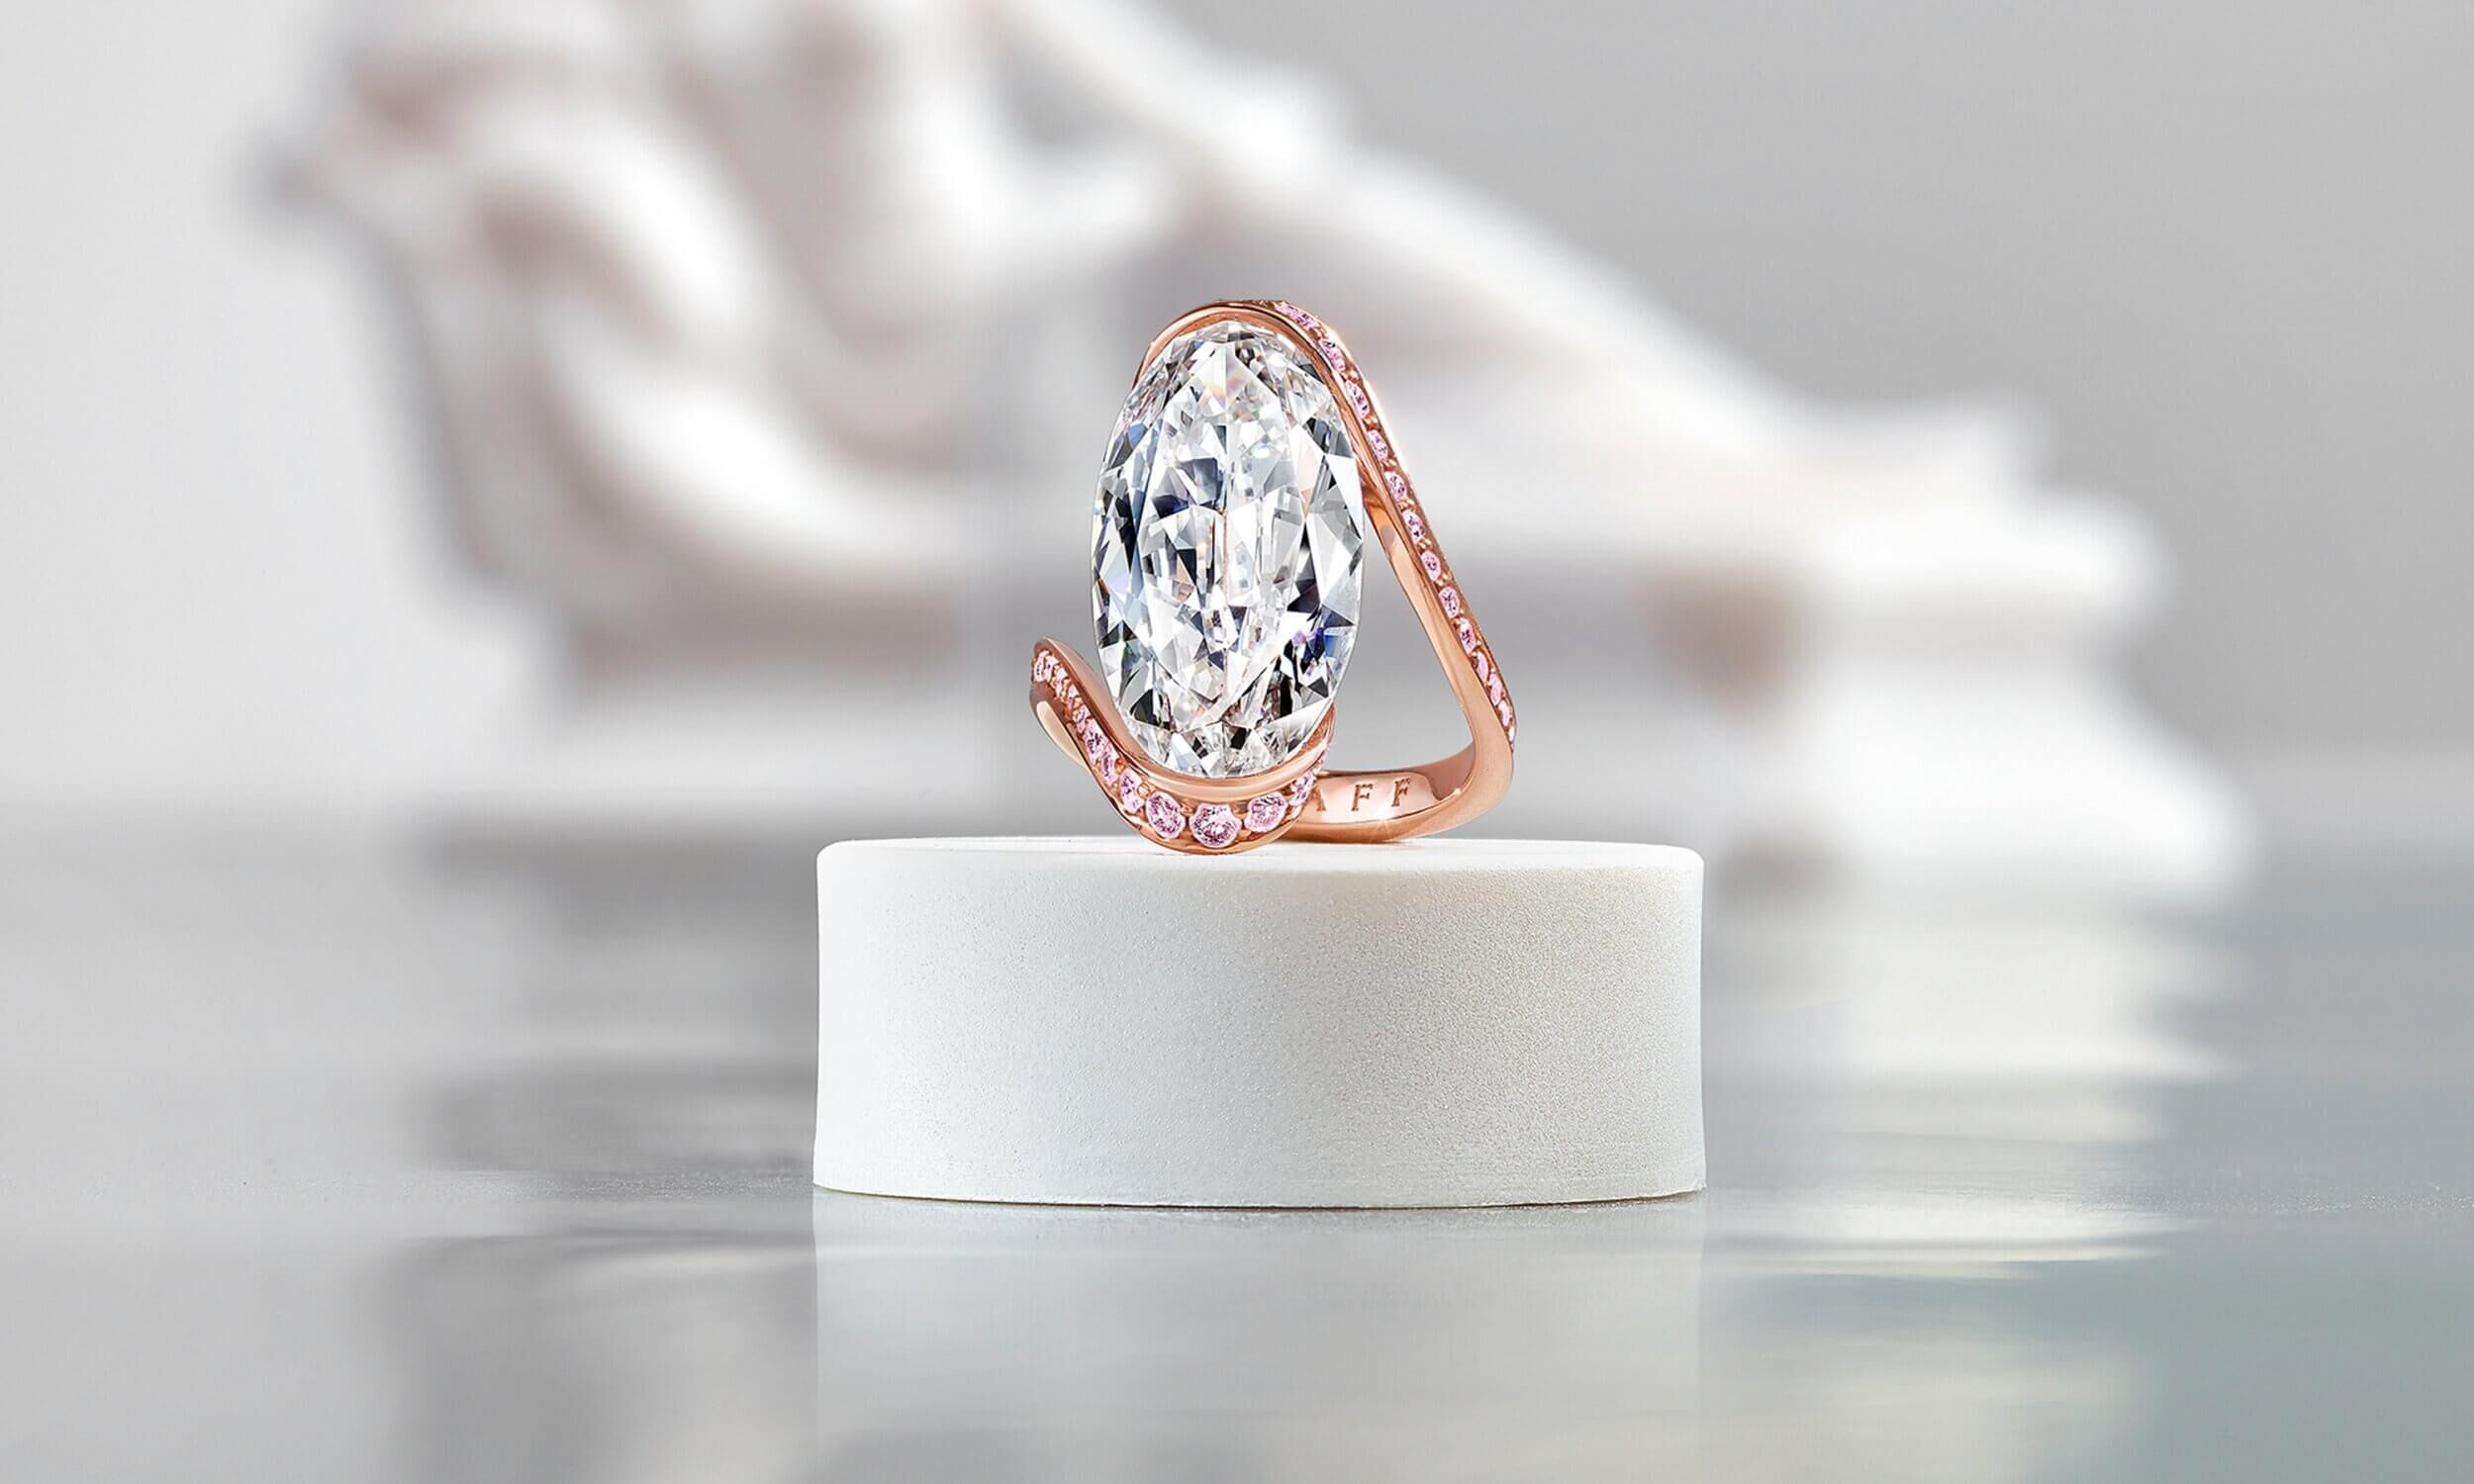 Graff D Internally Flawless White Oval Diamond High Jewellery Ring With Pink Pave Diamond Swirl Surround inside a Gallery